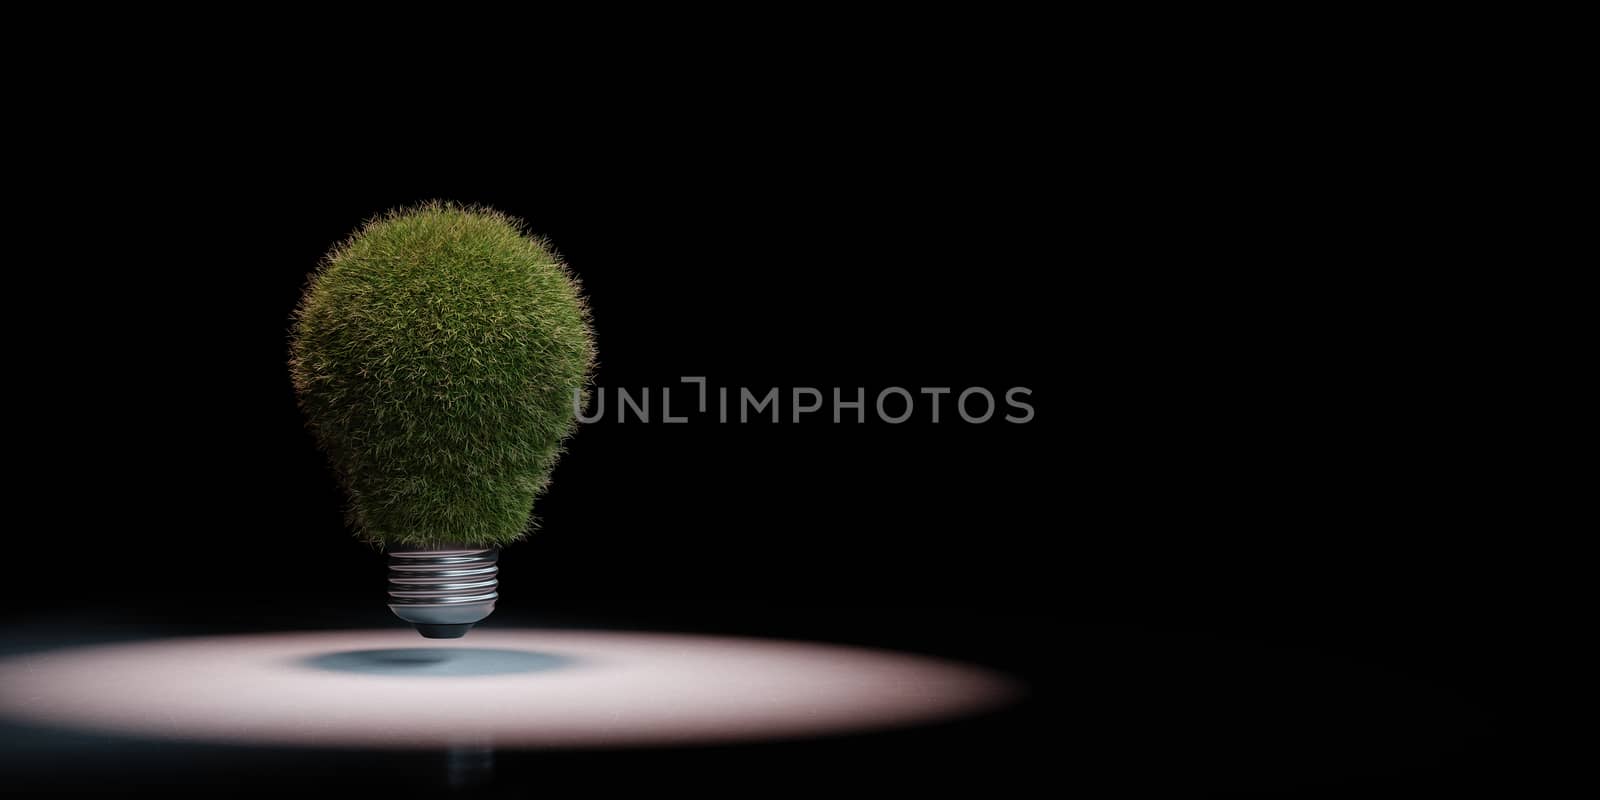 Grassy Light Bulb Spotlighted on Black Background with Copy Space 3D Illustration